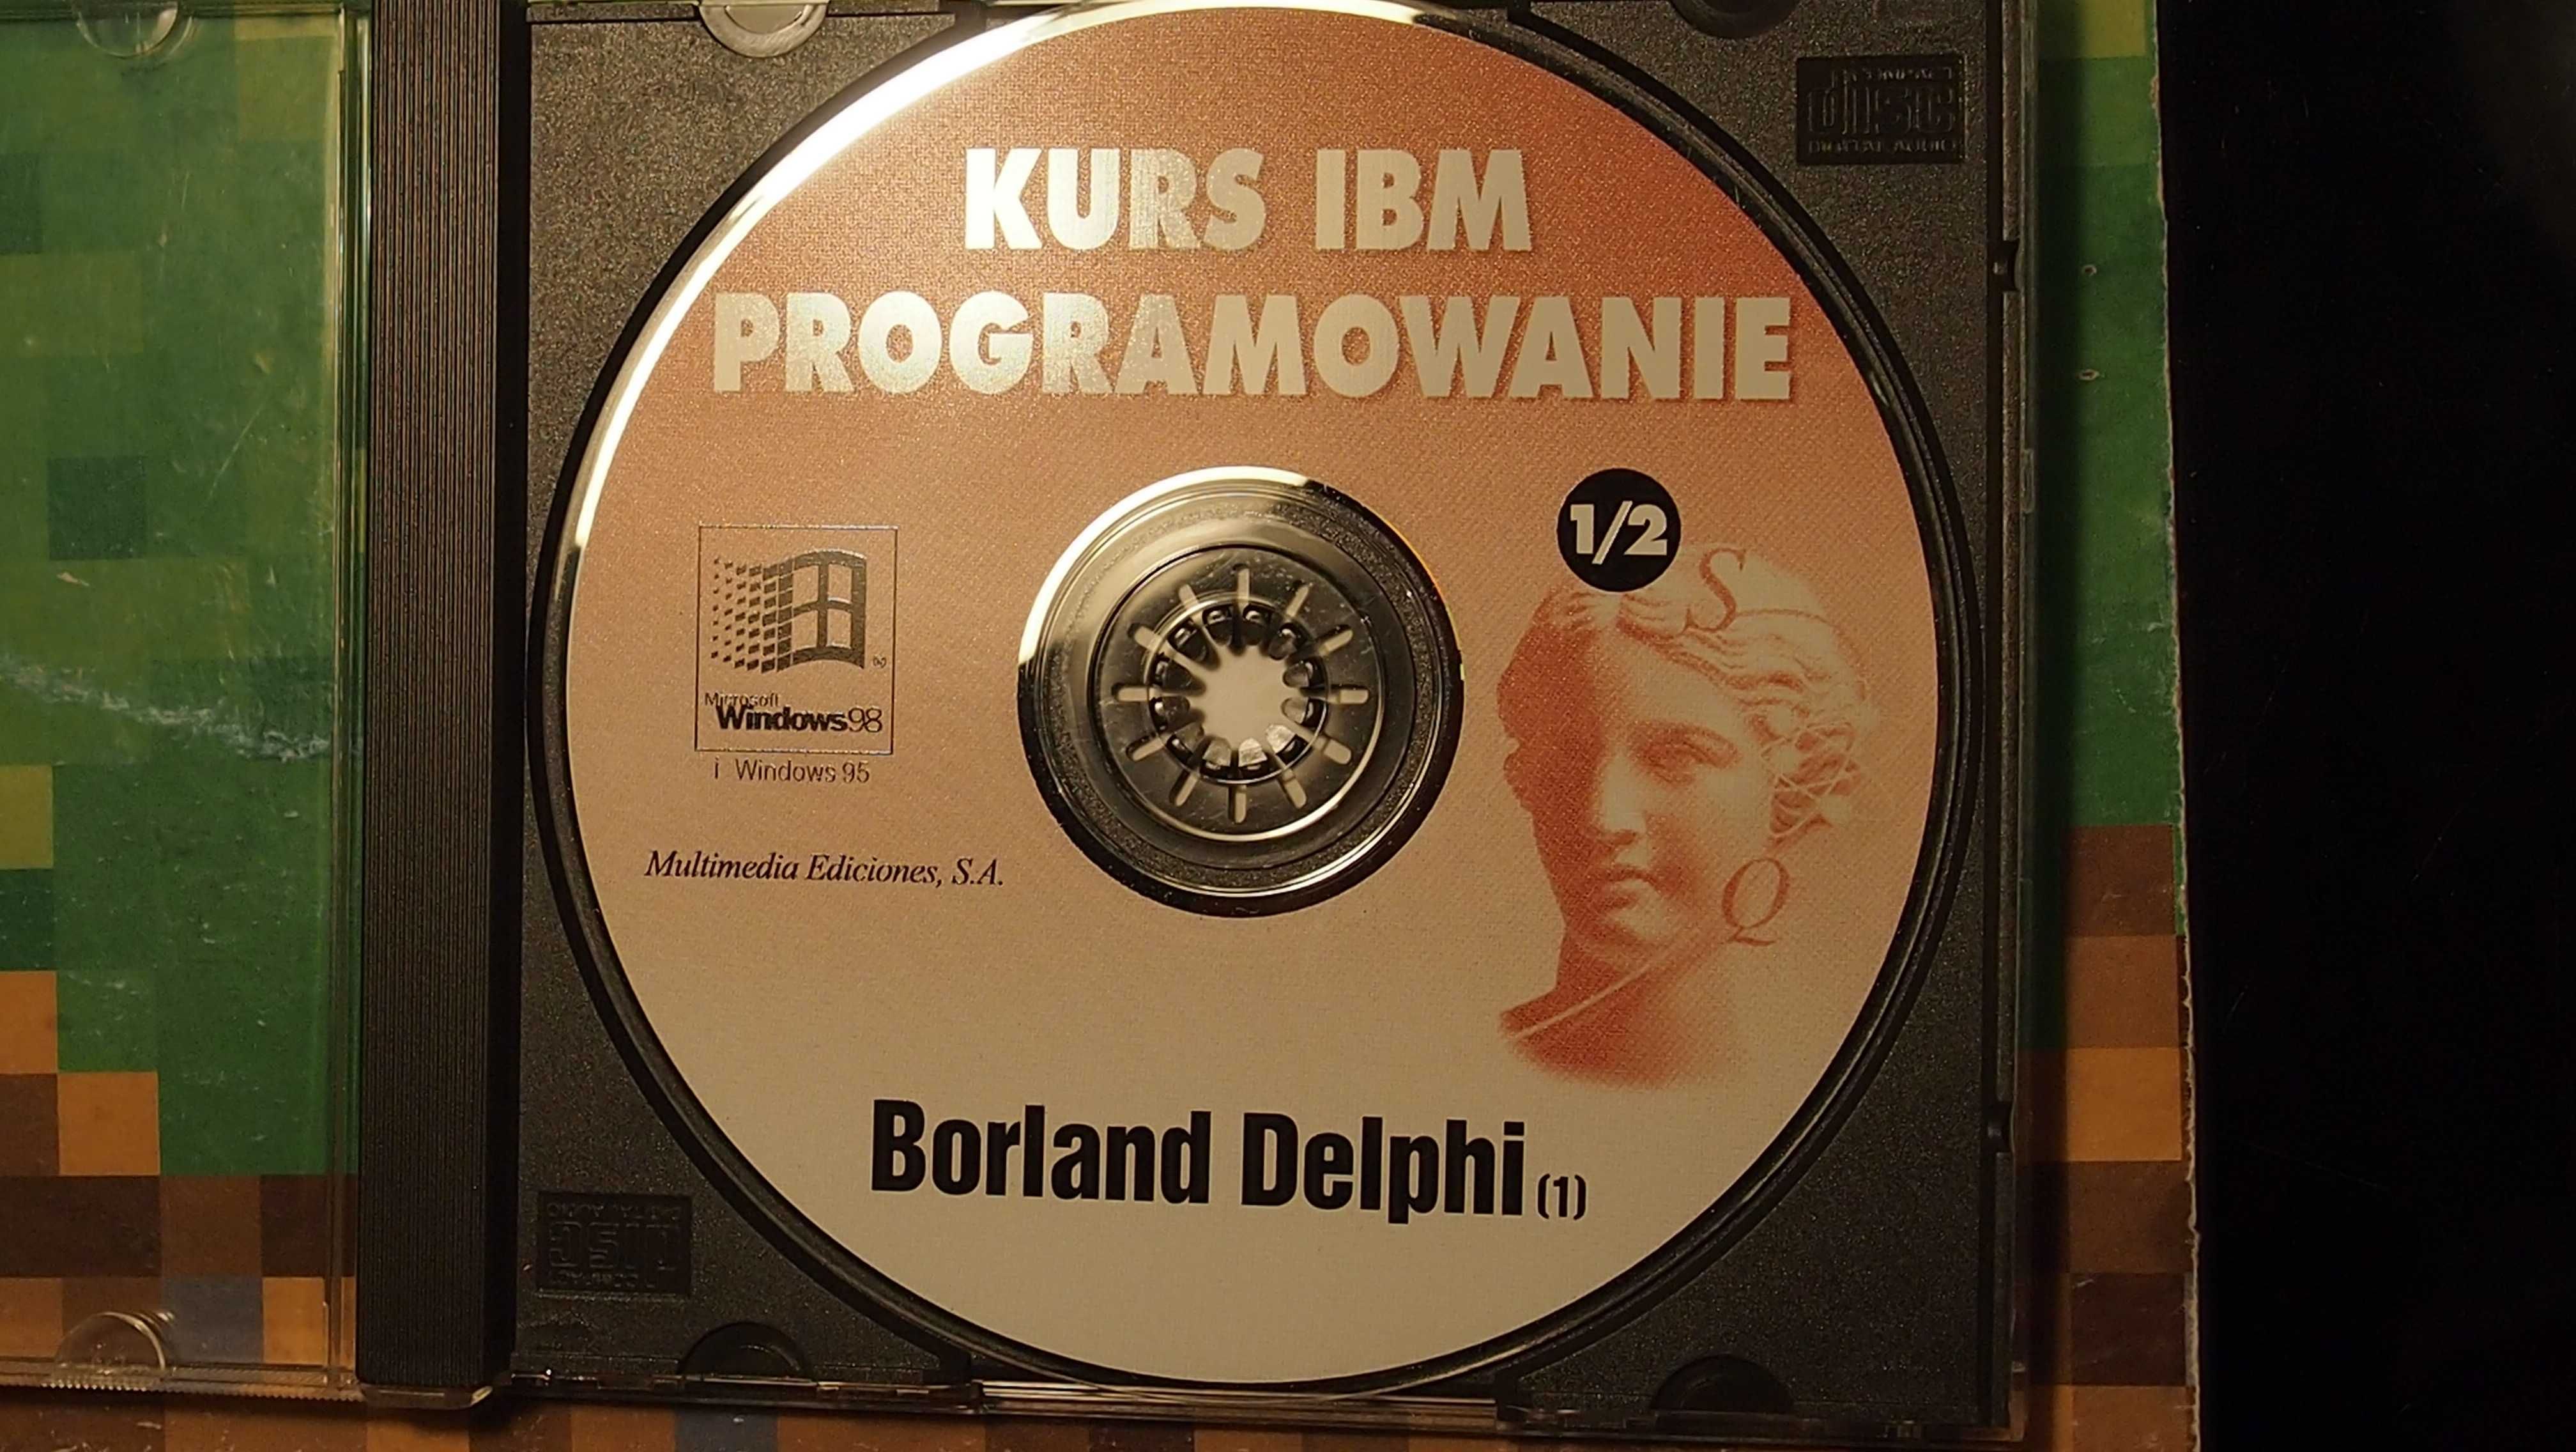 Kurs IBM programowanie 1/2, Borland Delphi 32 bity [1];